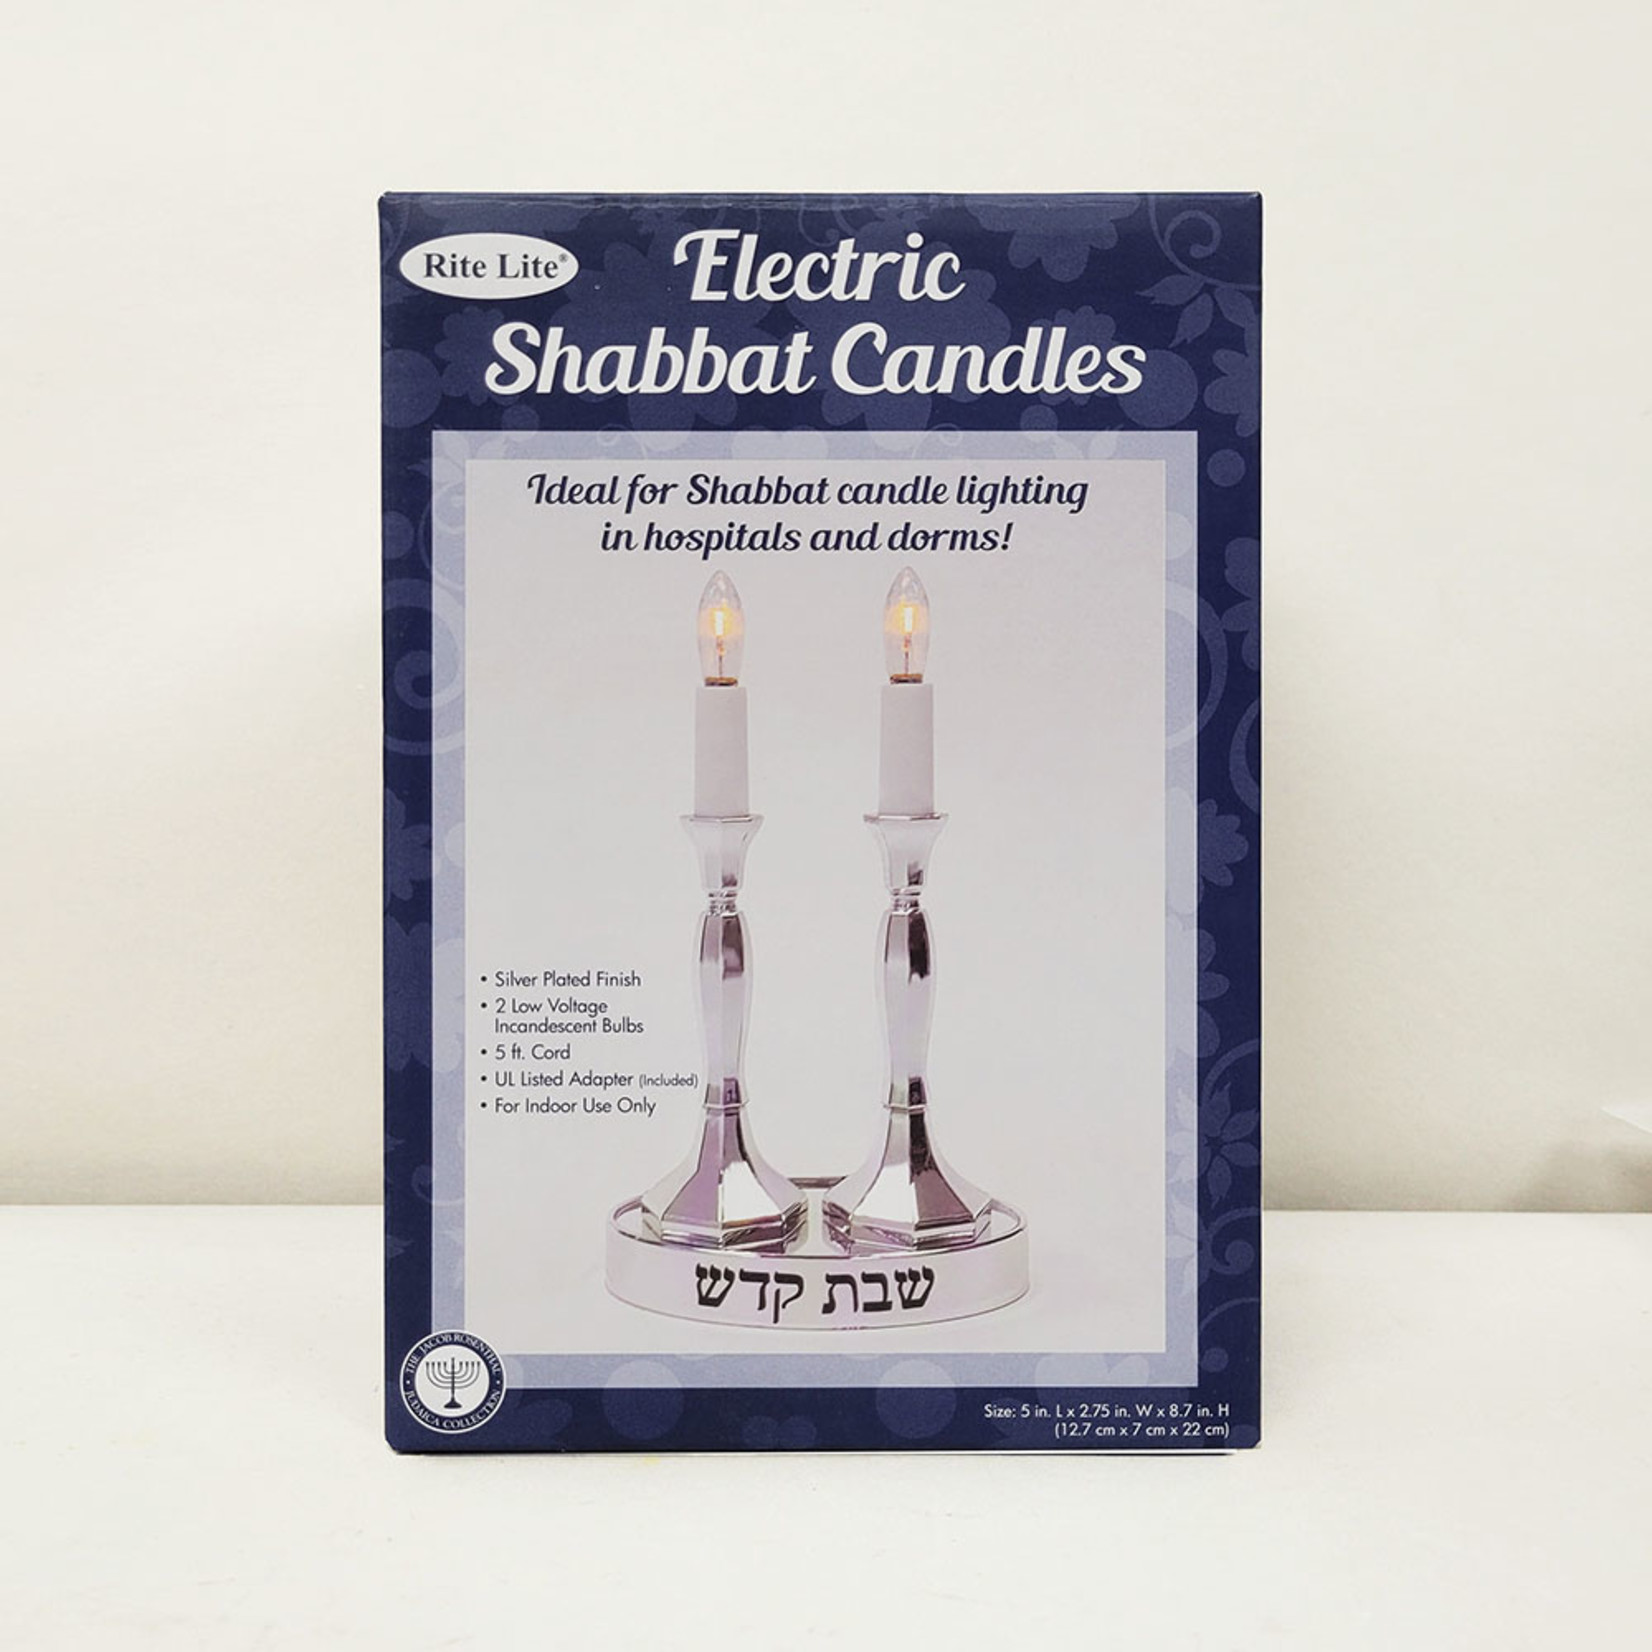 Electric Shabbat Candlesticks